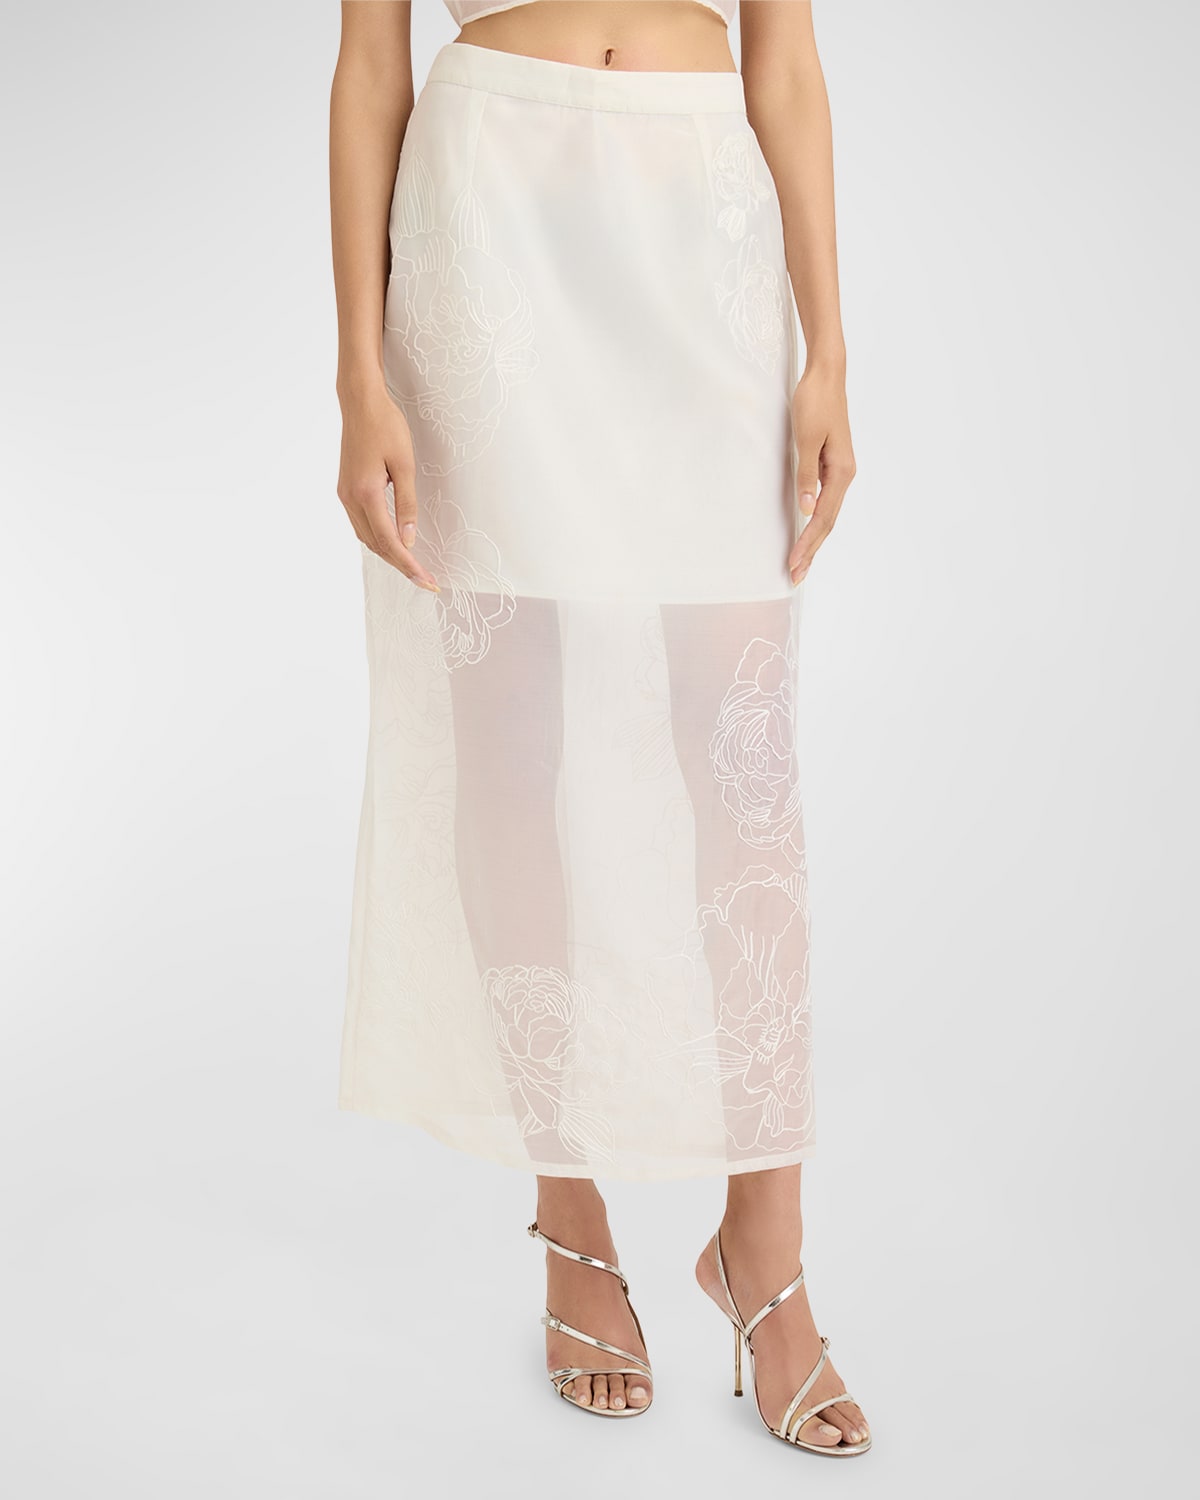 Etta Floral-Embroidered Sheer Midi Skirt